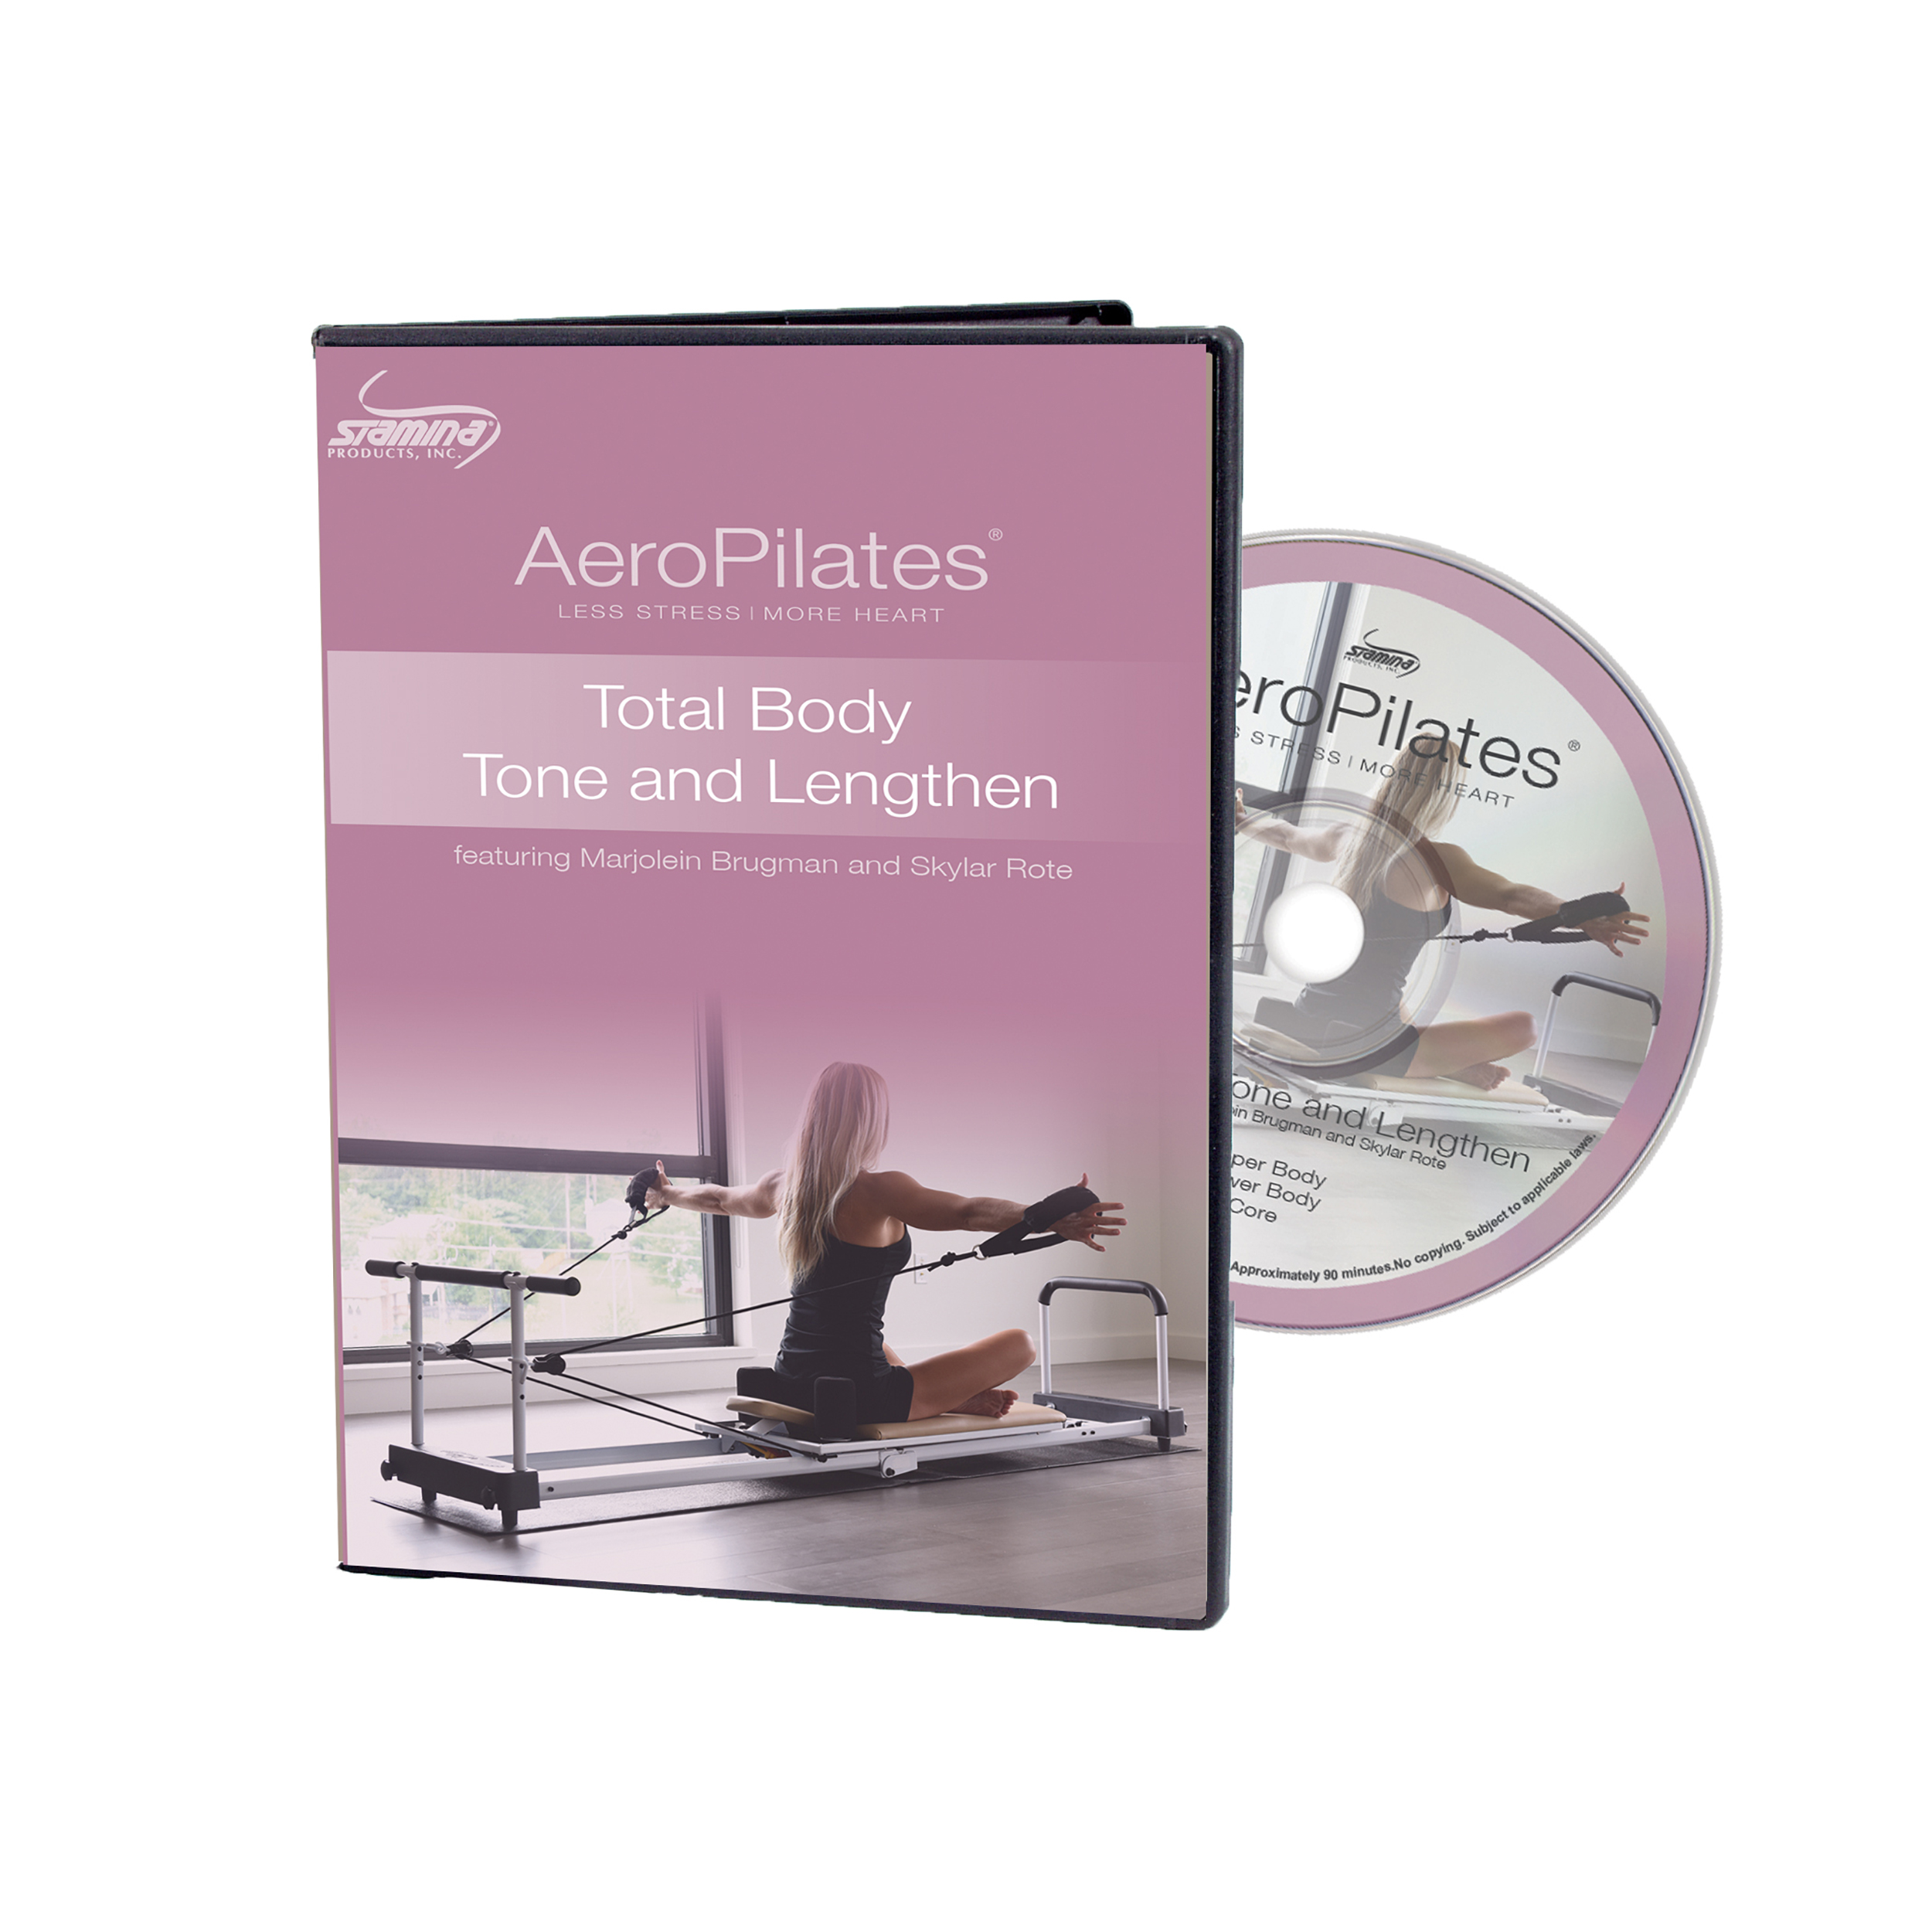 Aeropilates Total Body Tone and Lengthen Exercise Guide DVD